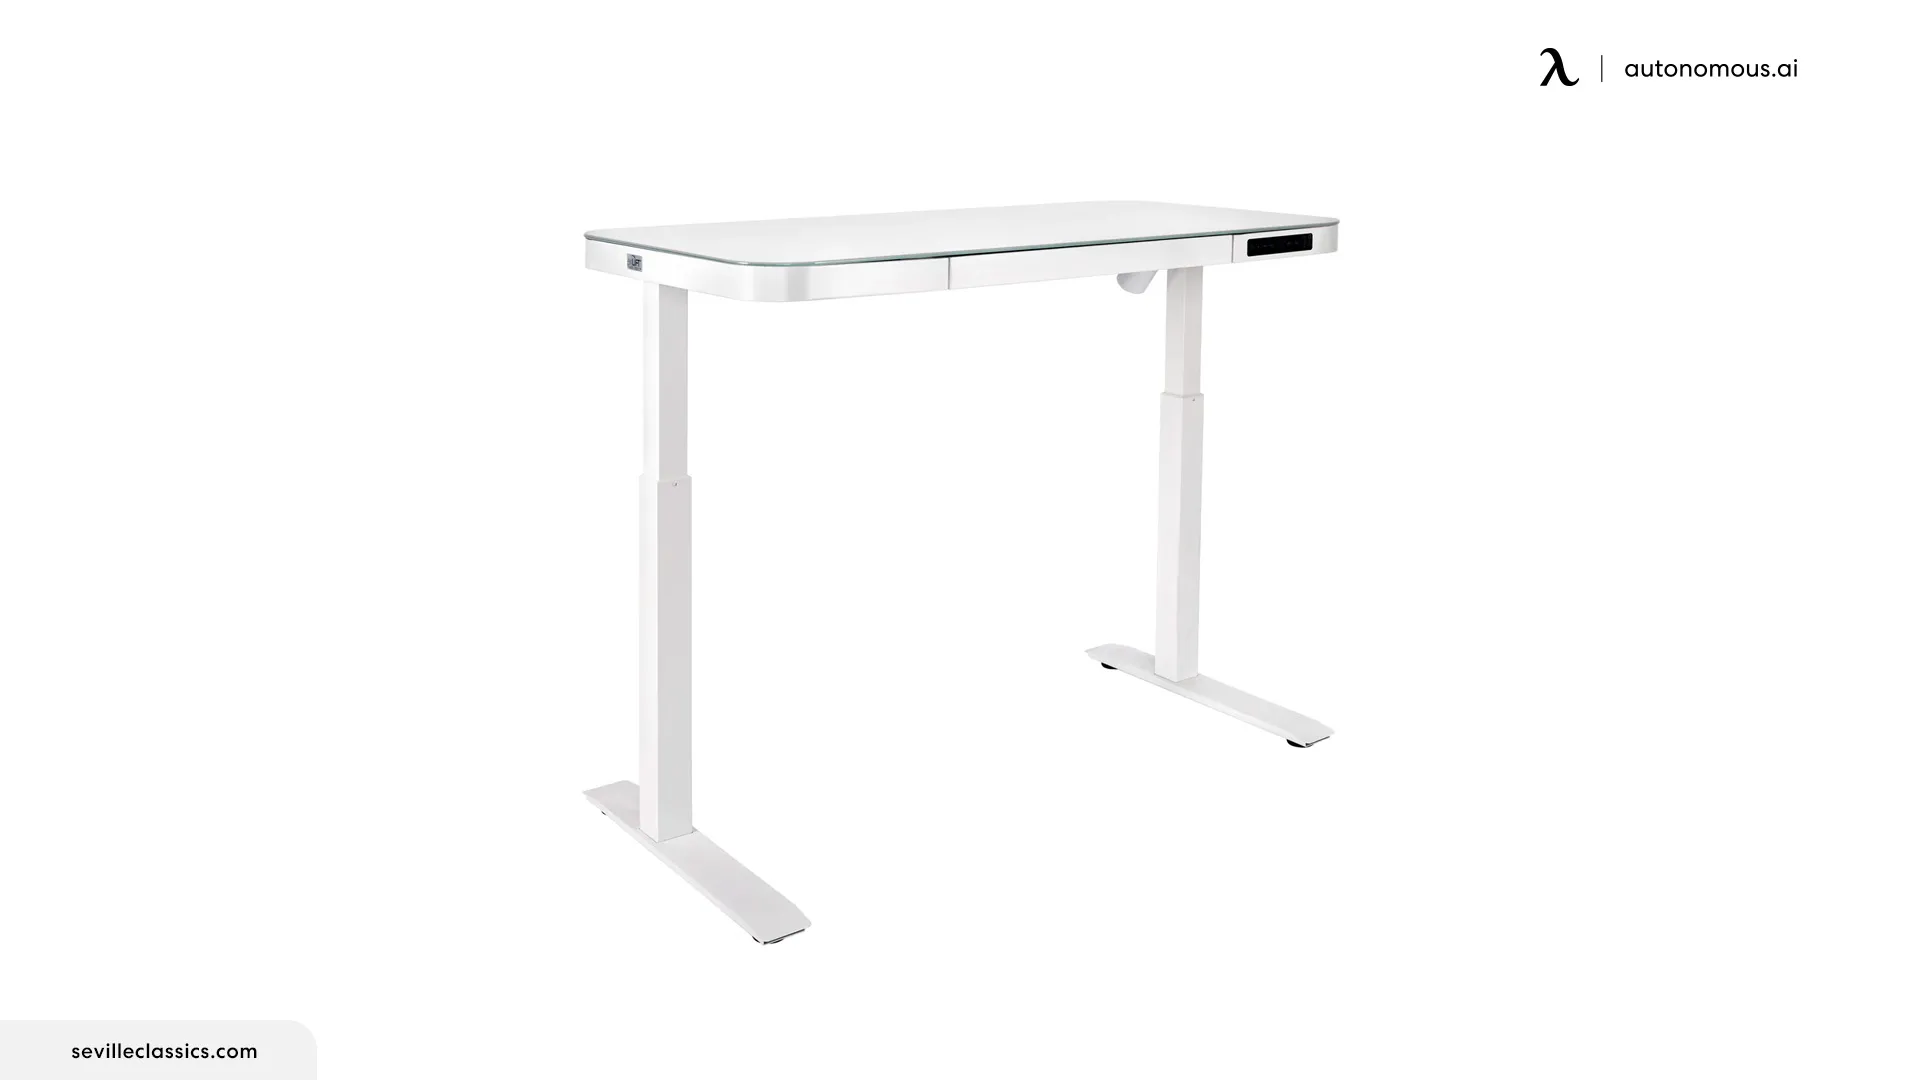 Seville Classics airLIFT® Tempered Glass Top Desks